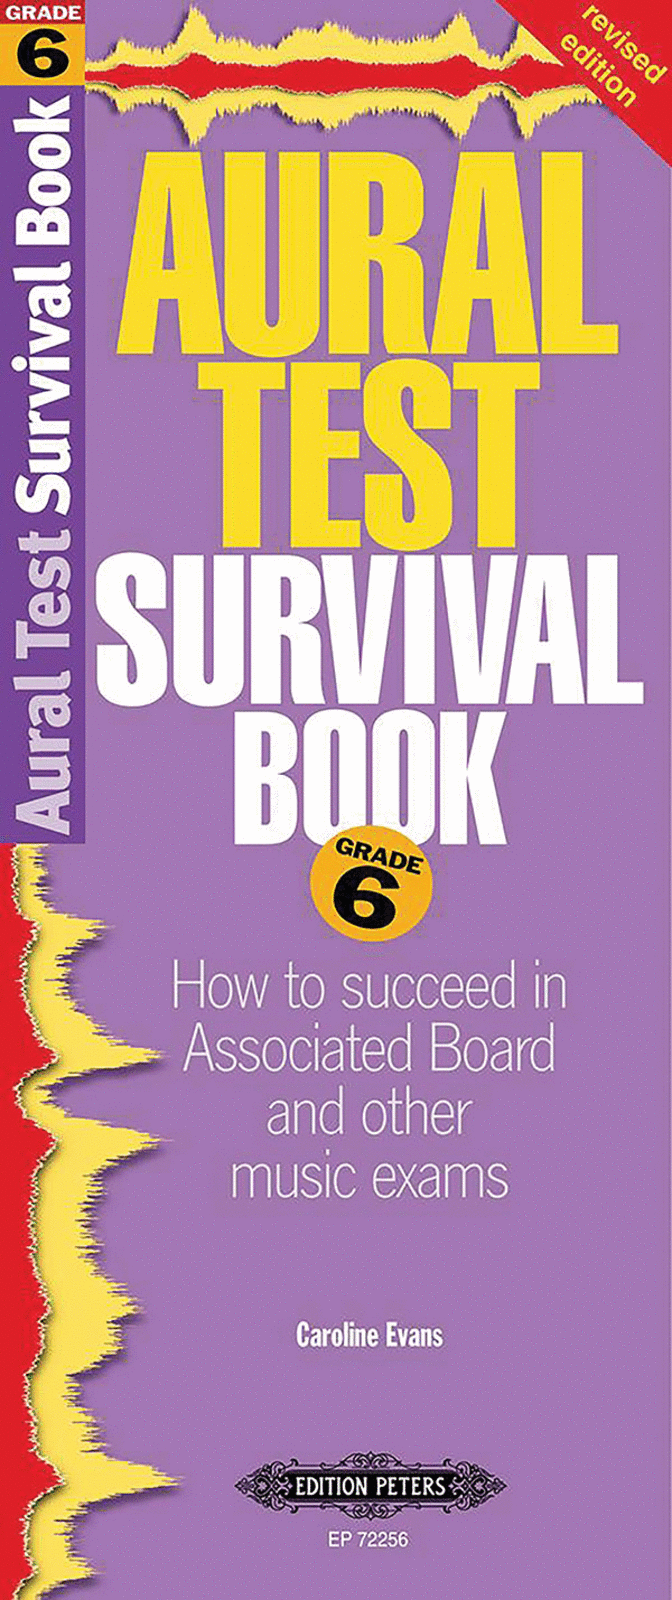 Aural Test Survival Book: Grade 6 (Revised Edition)